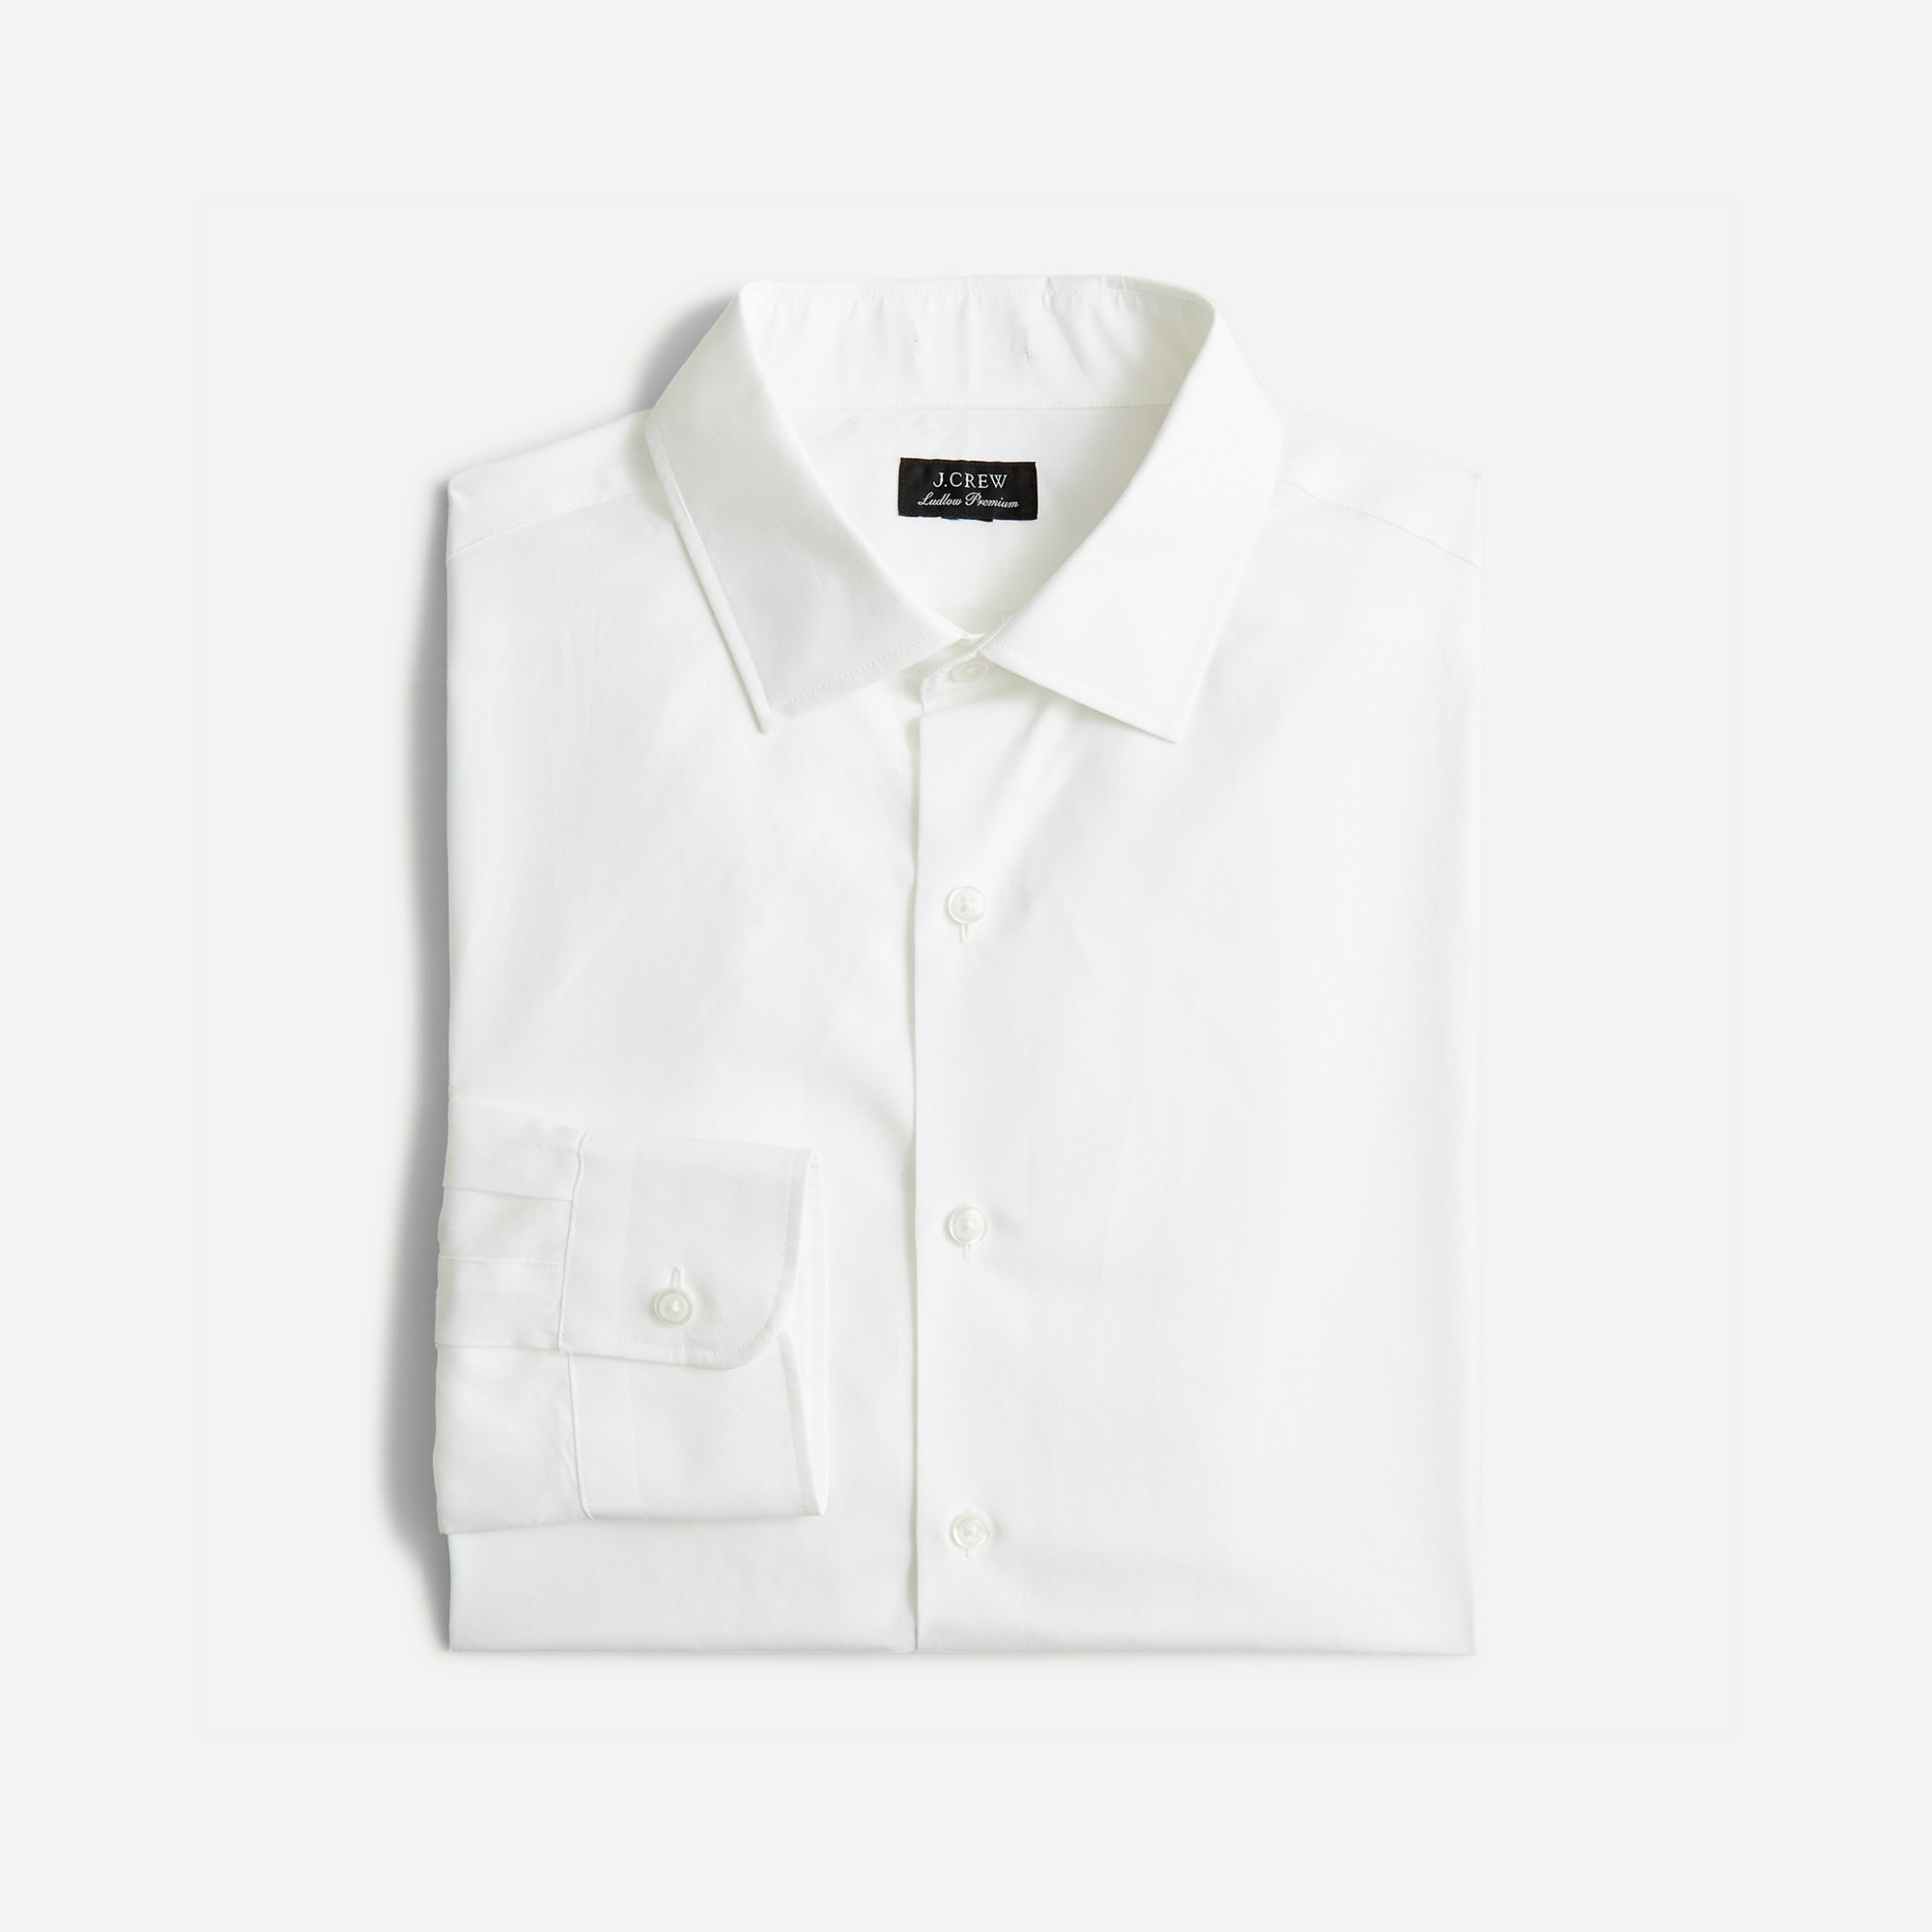 Jcrew Ludlow Premium fine cotton dress shirt